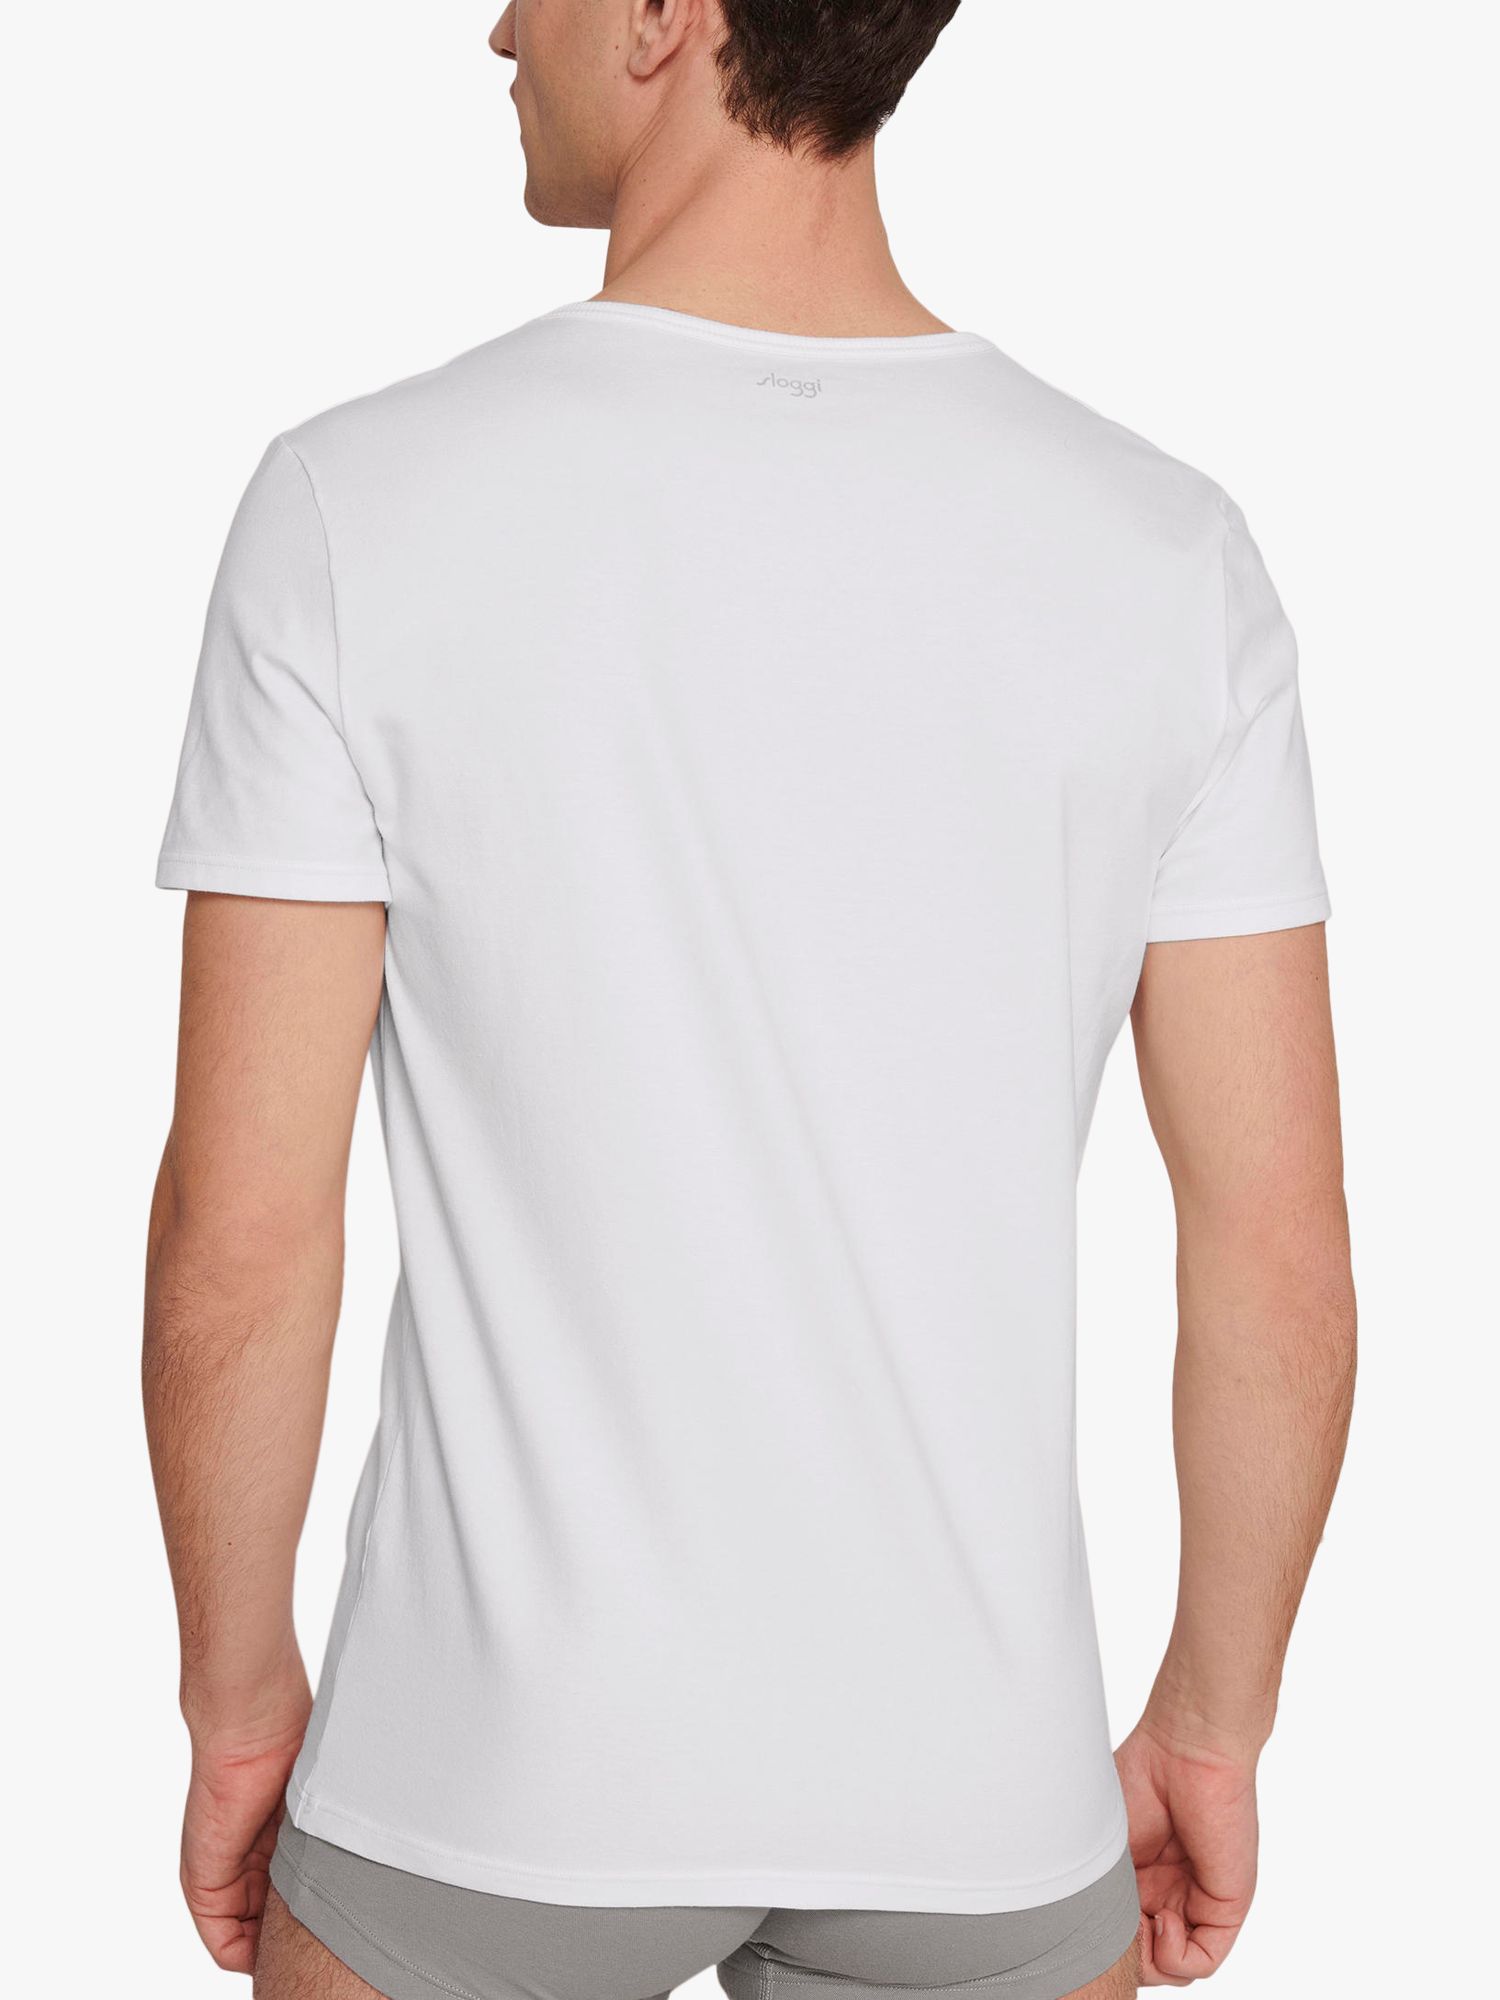 sloggi GO V-Neck Jersey Short Sleeve Lounge T-Shirt, White, L